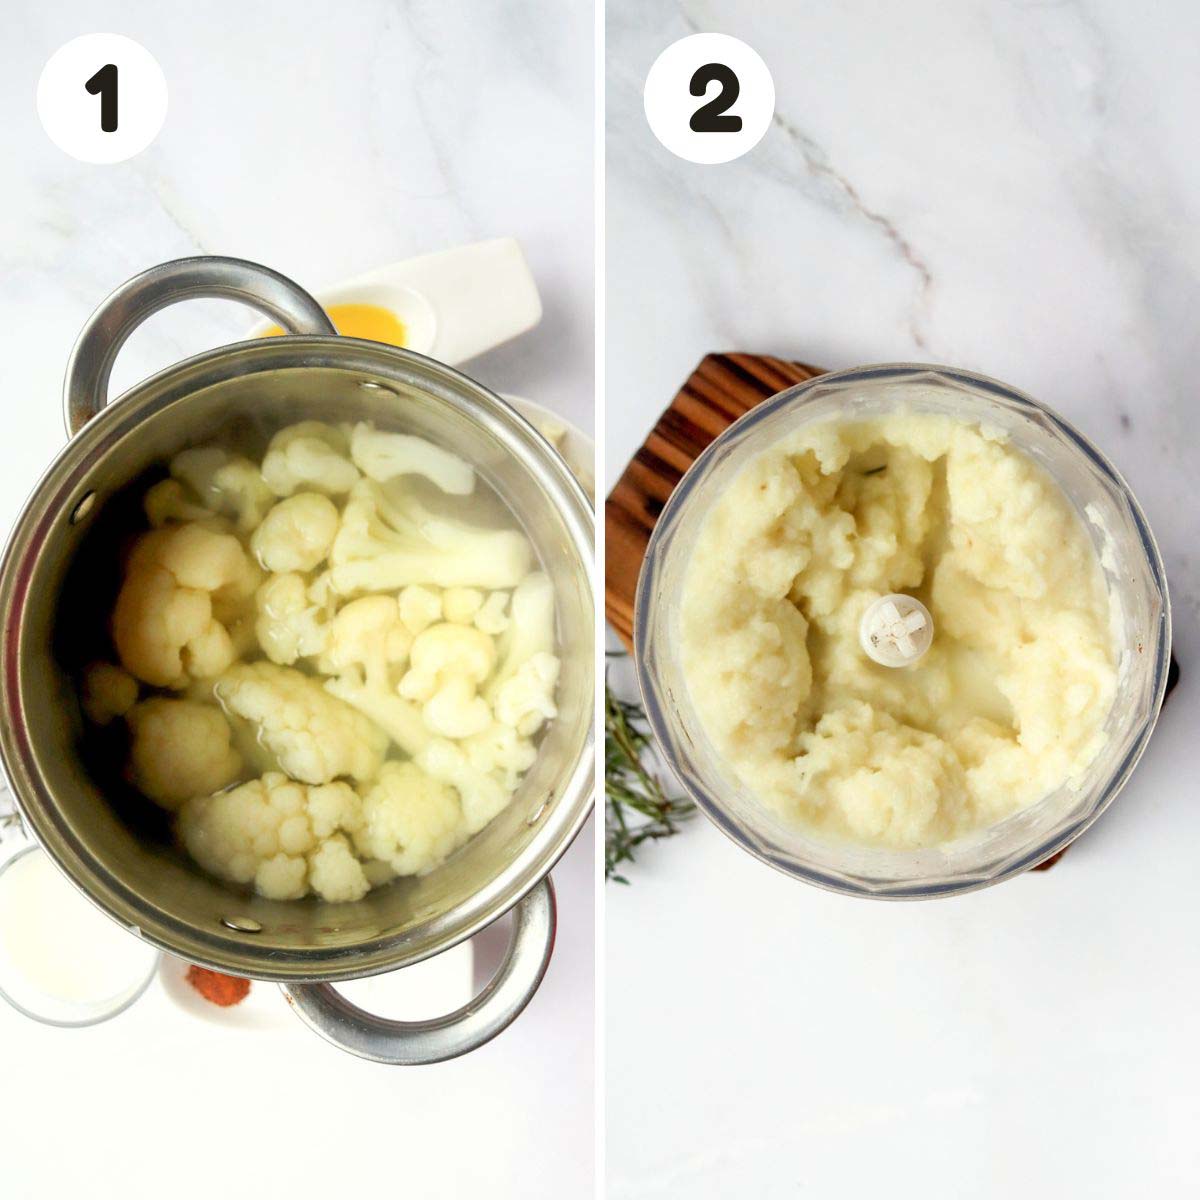 Steps to make the mashed cauliflower.